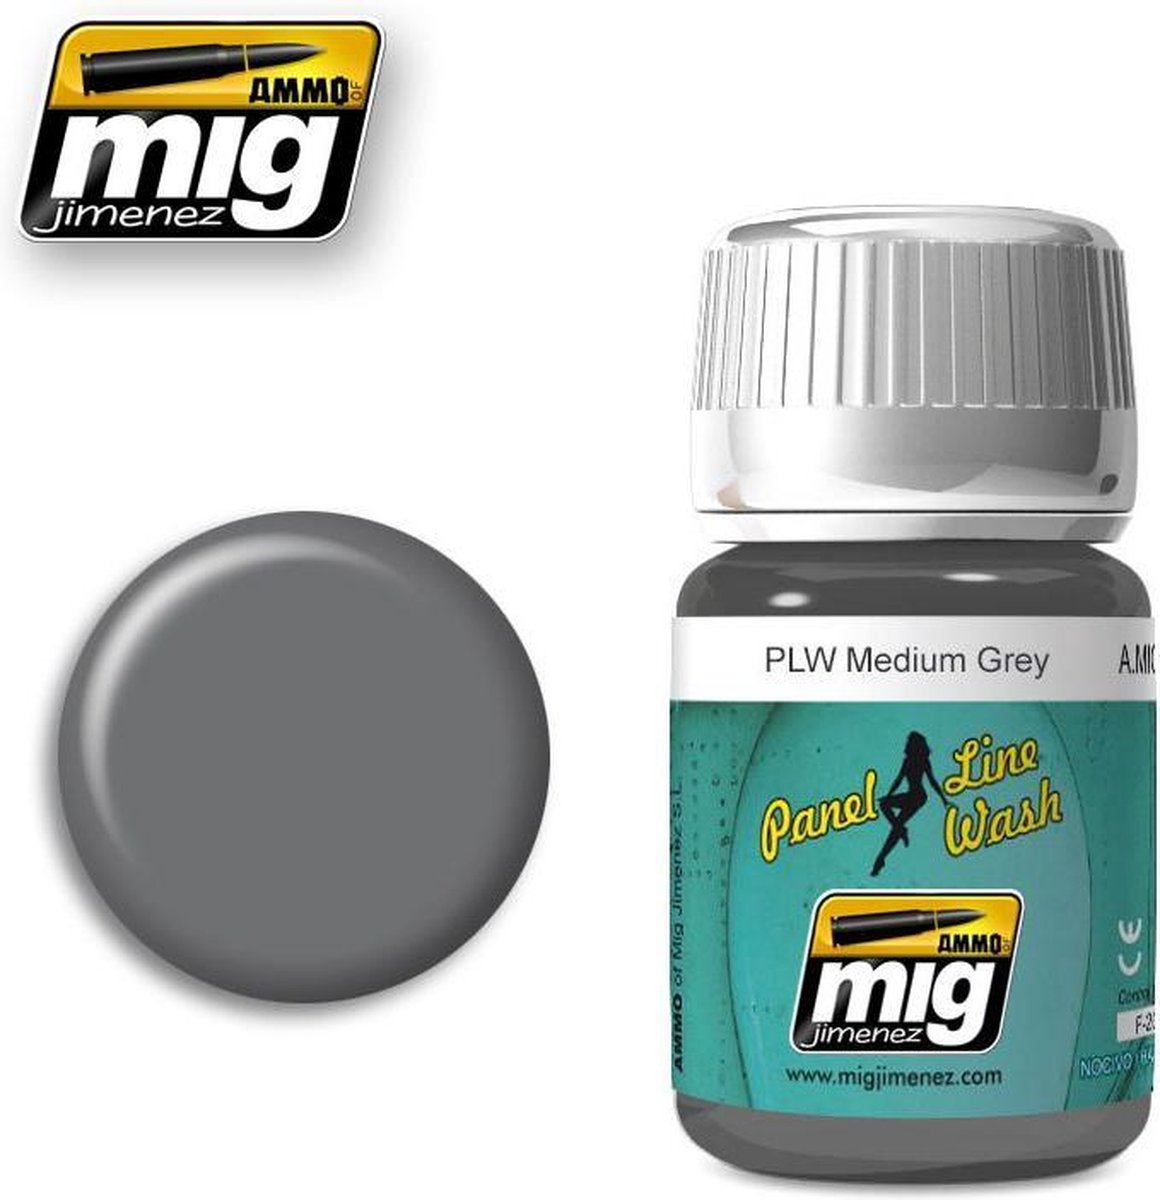 AMMO MIG 1601 PLW Medium Grey Effecten potje